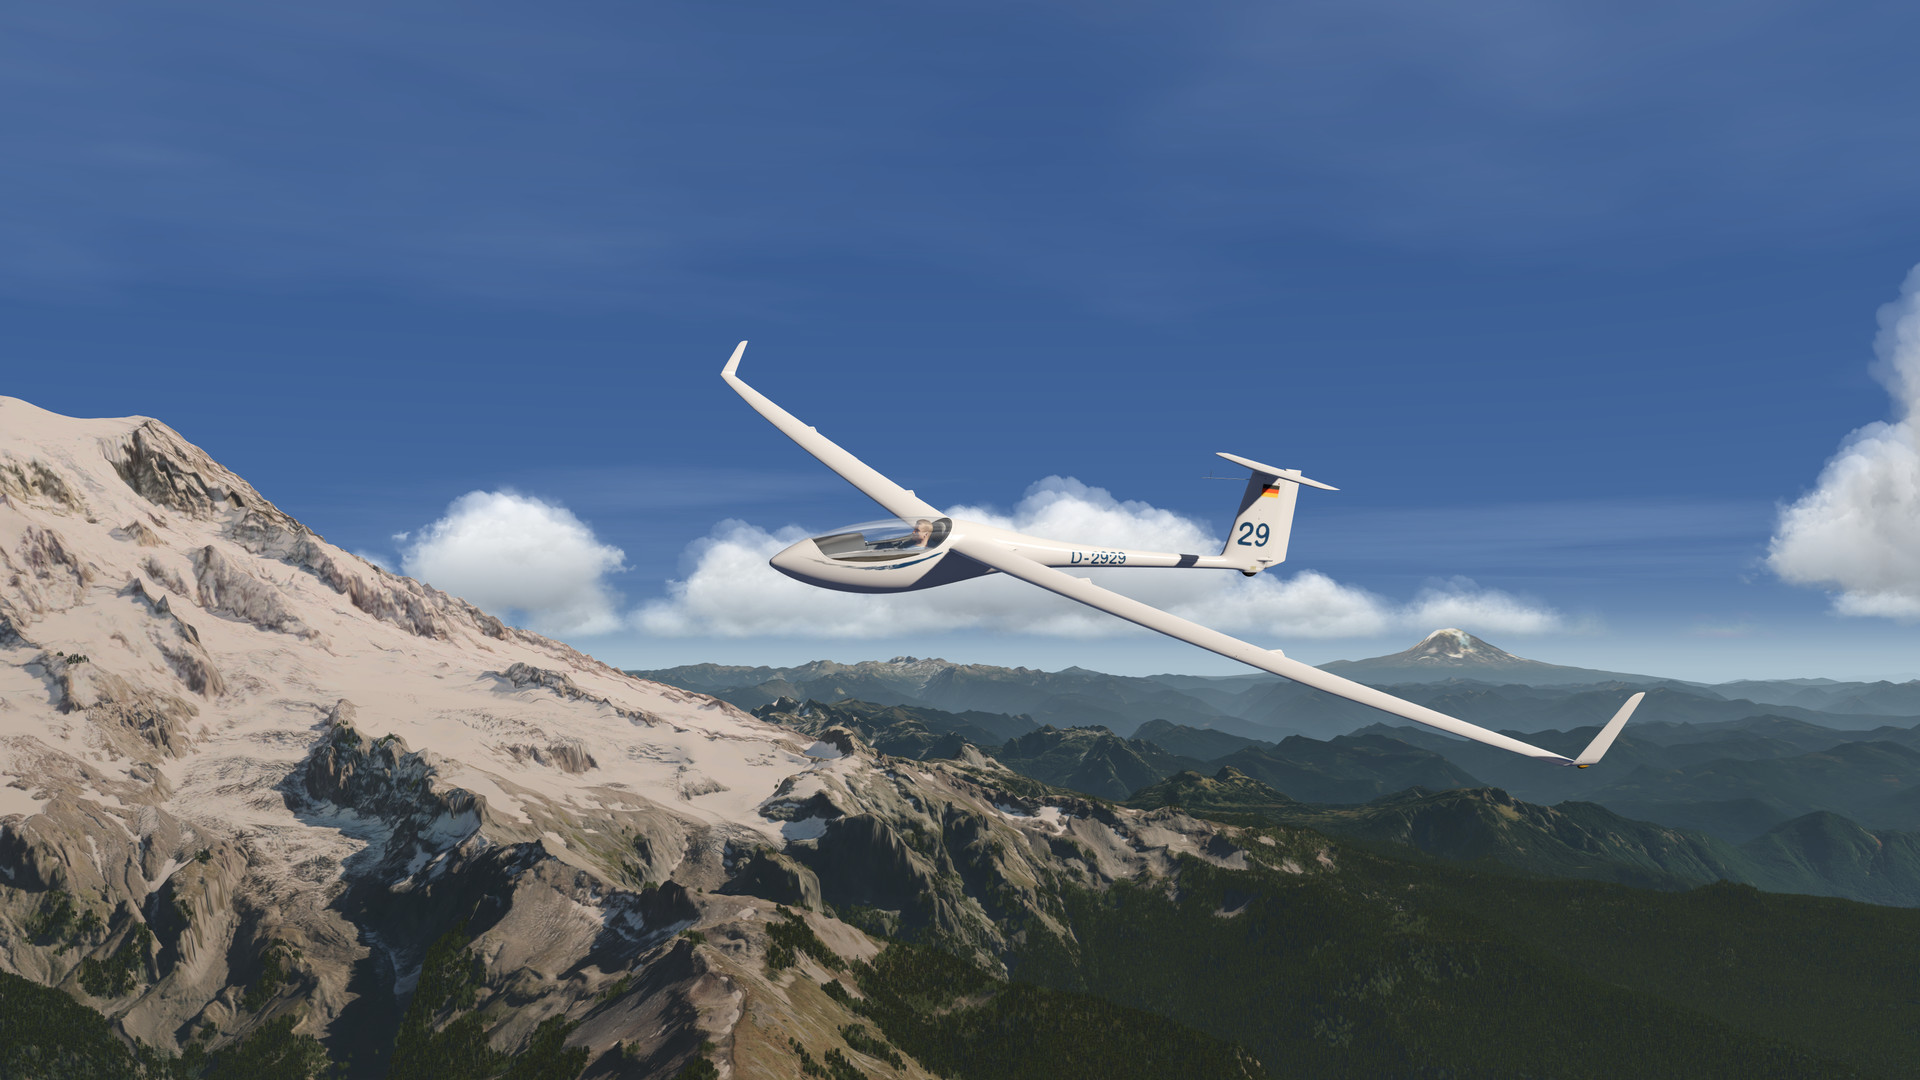 Aerofly FS 4 Flight Simulator Free Download